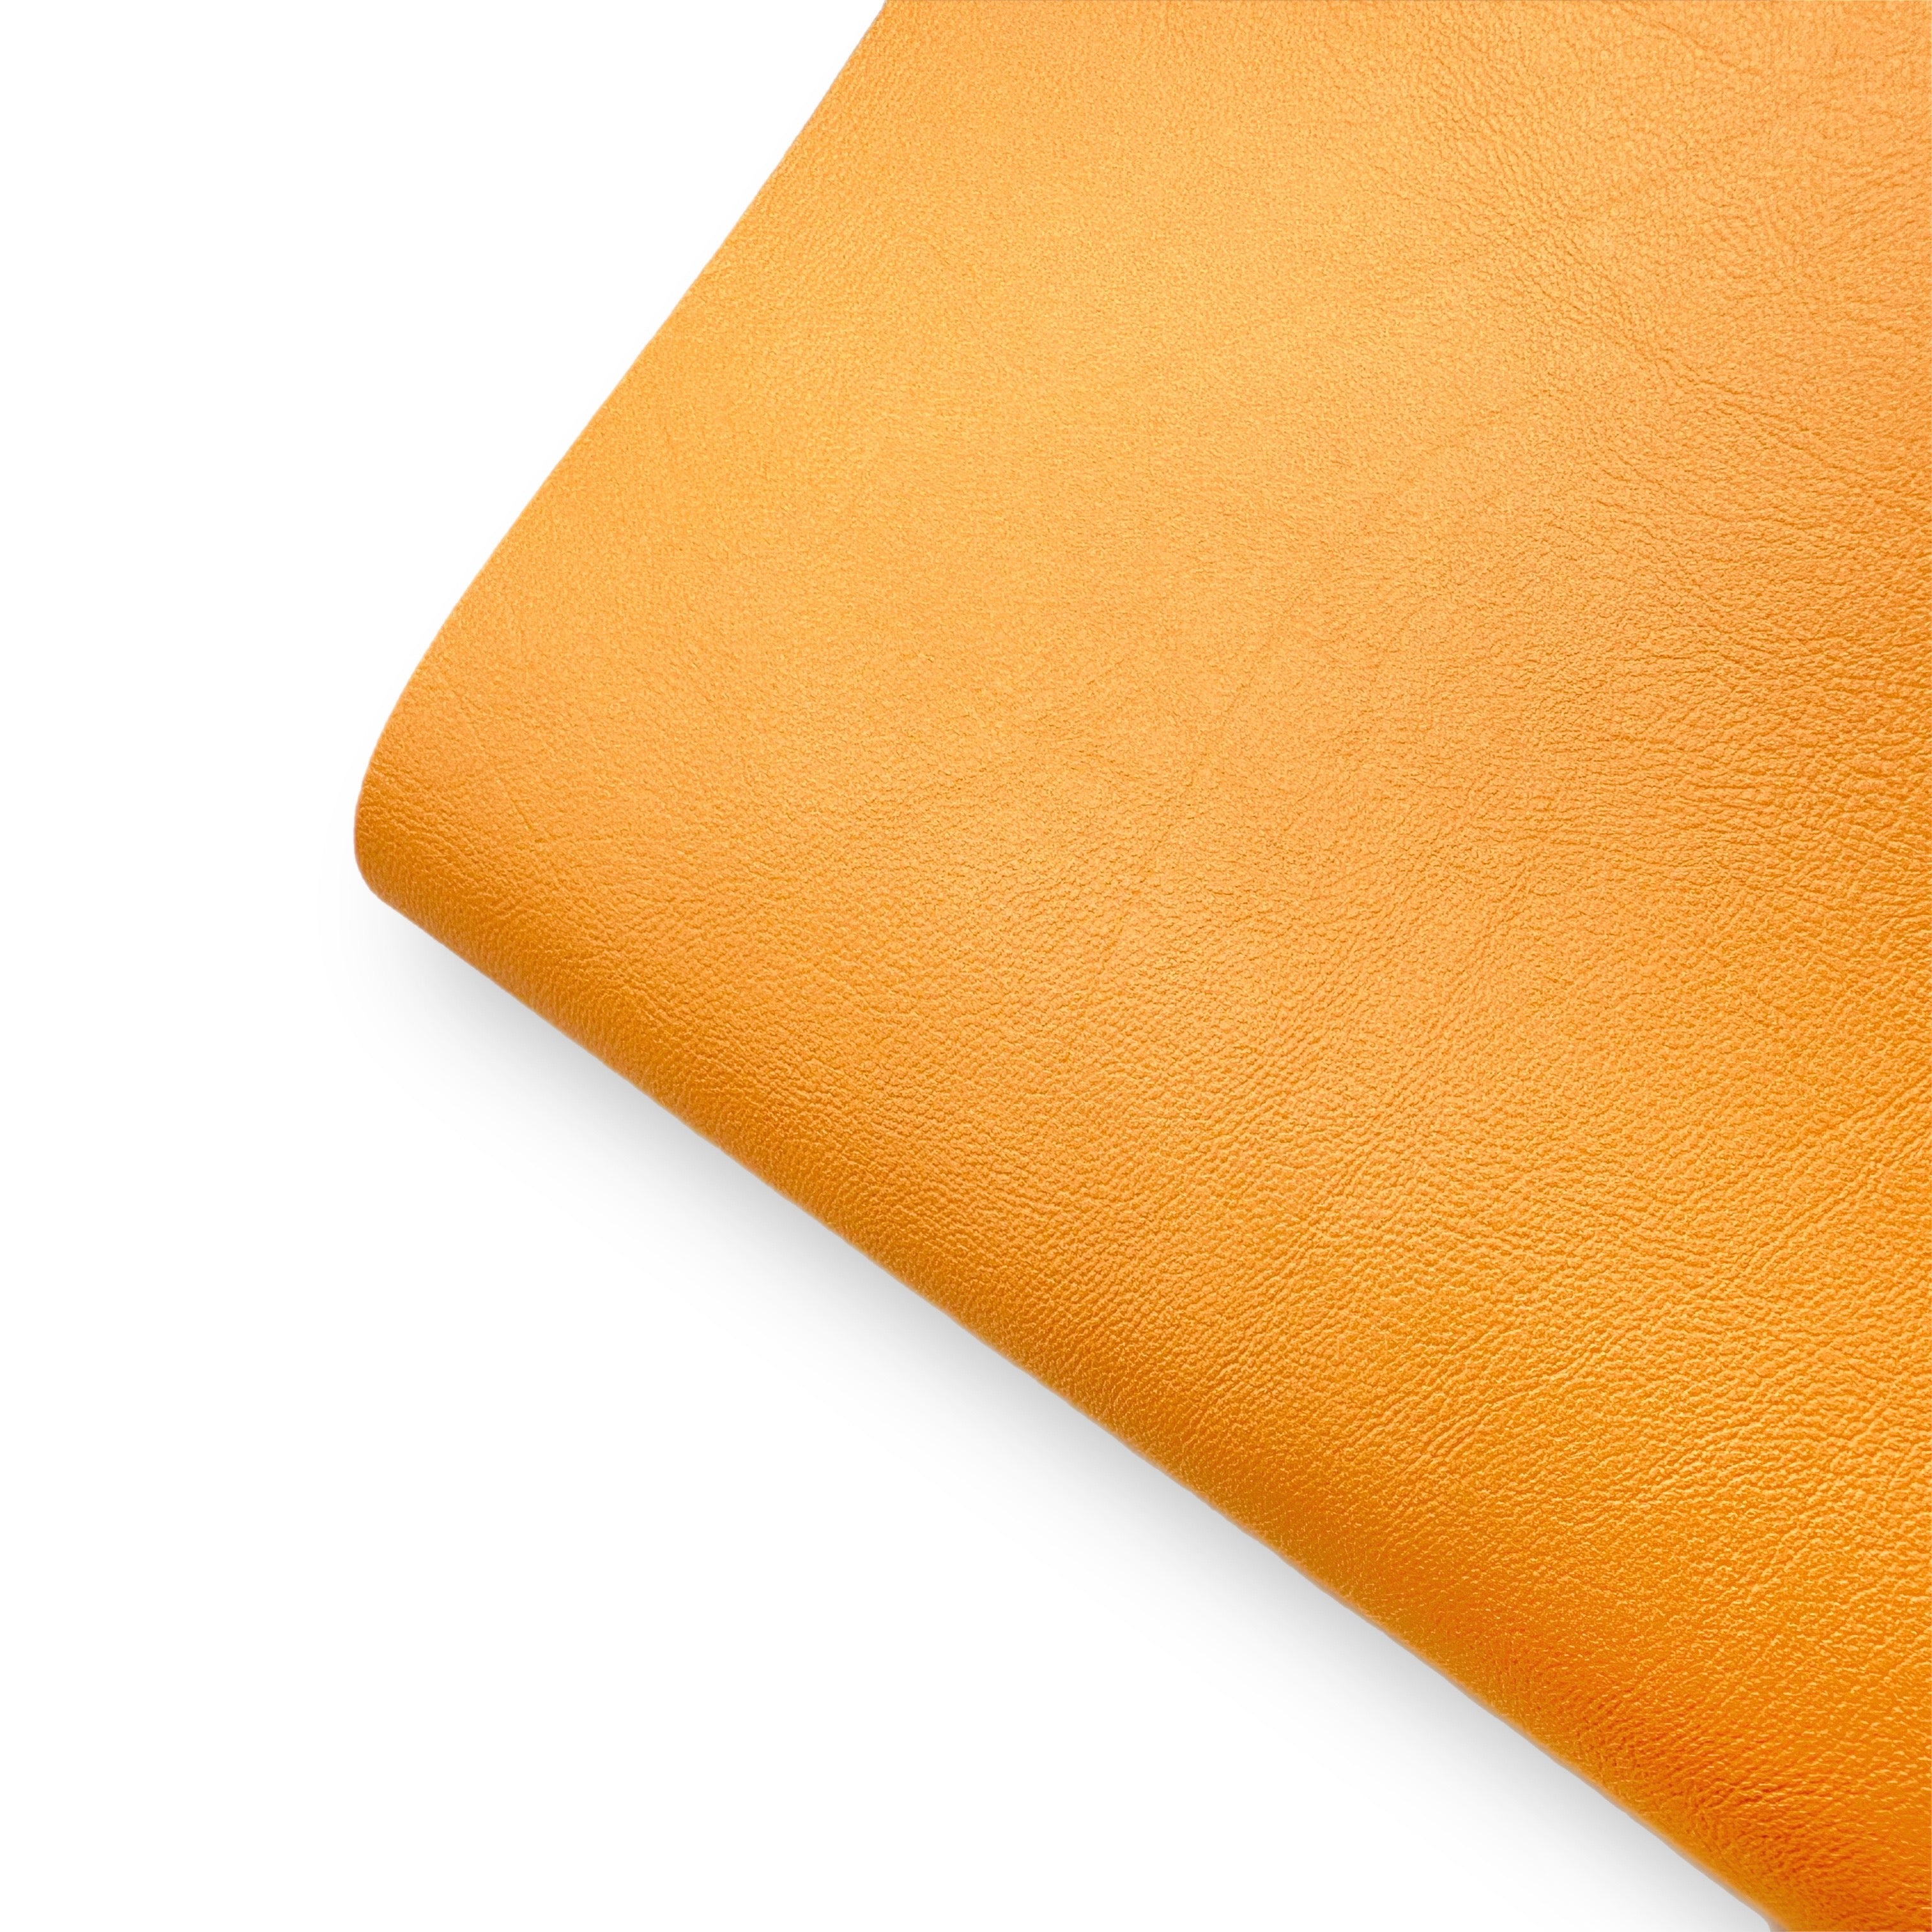 Peach Passion Core Colour Premium Faux Leather Fabric Sheets